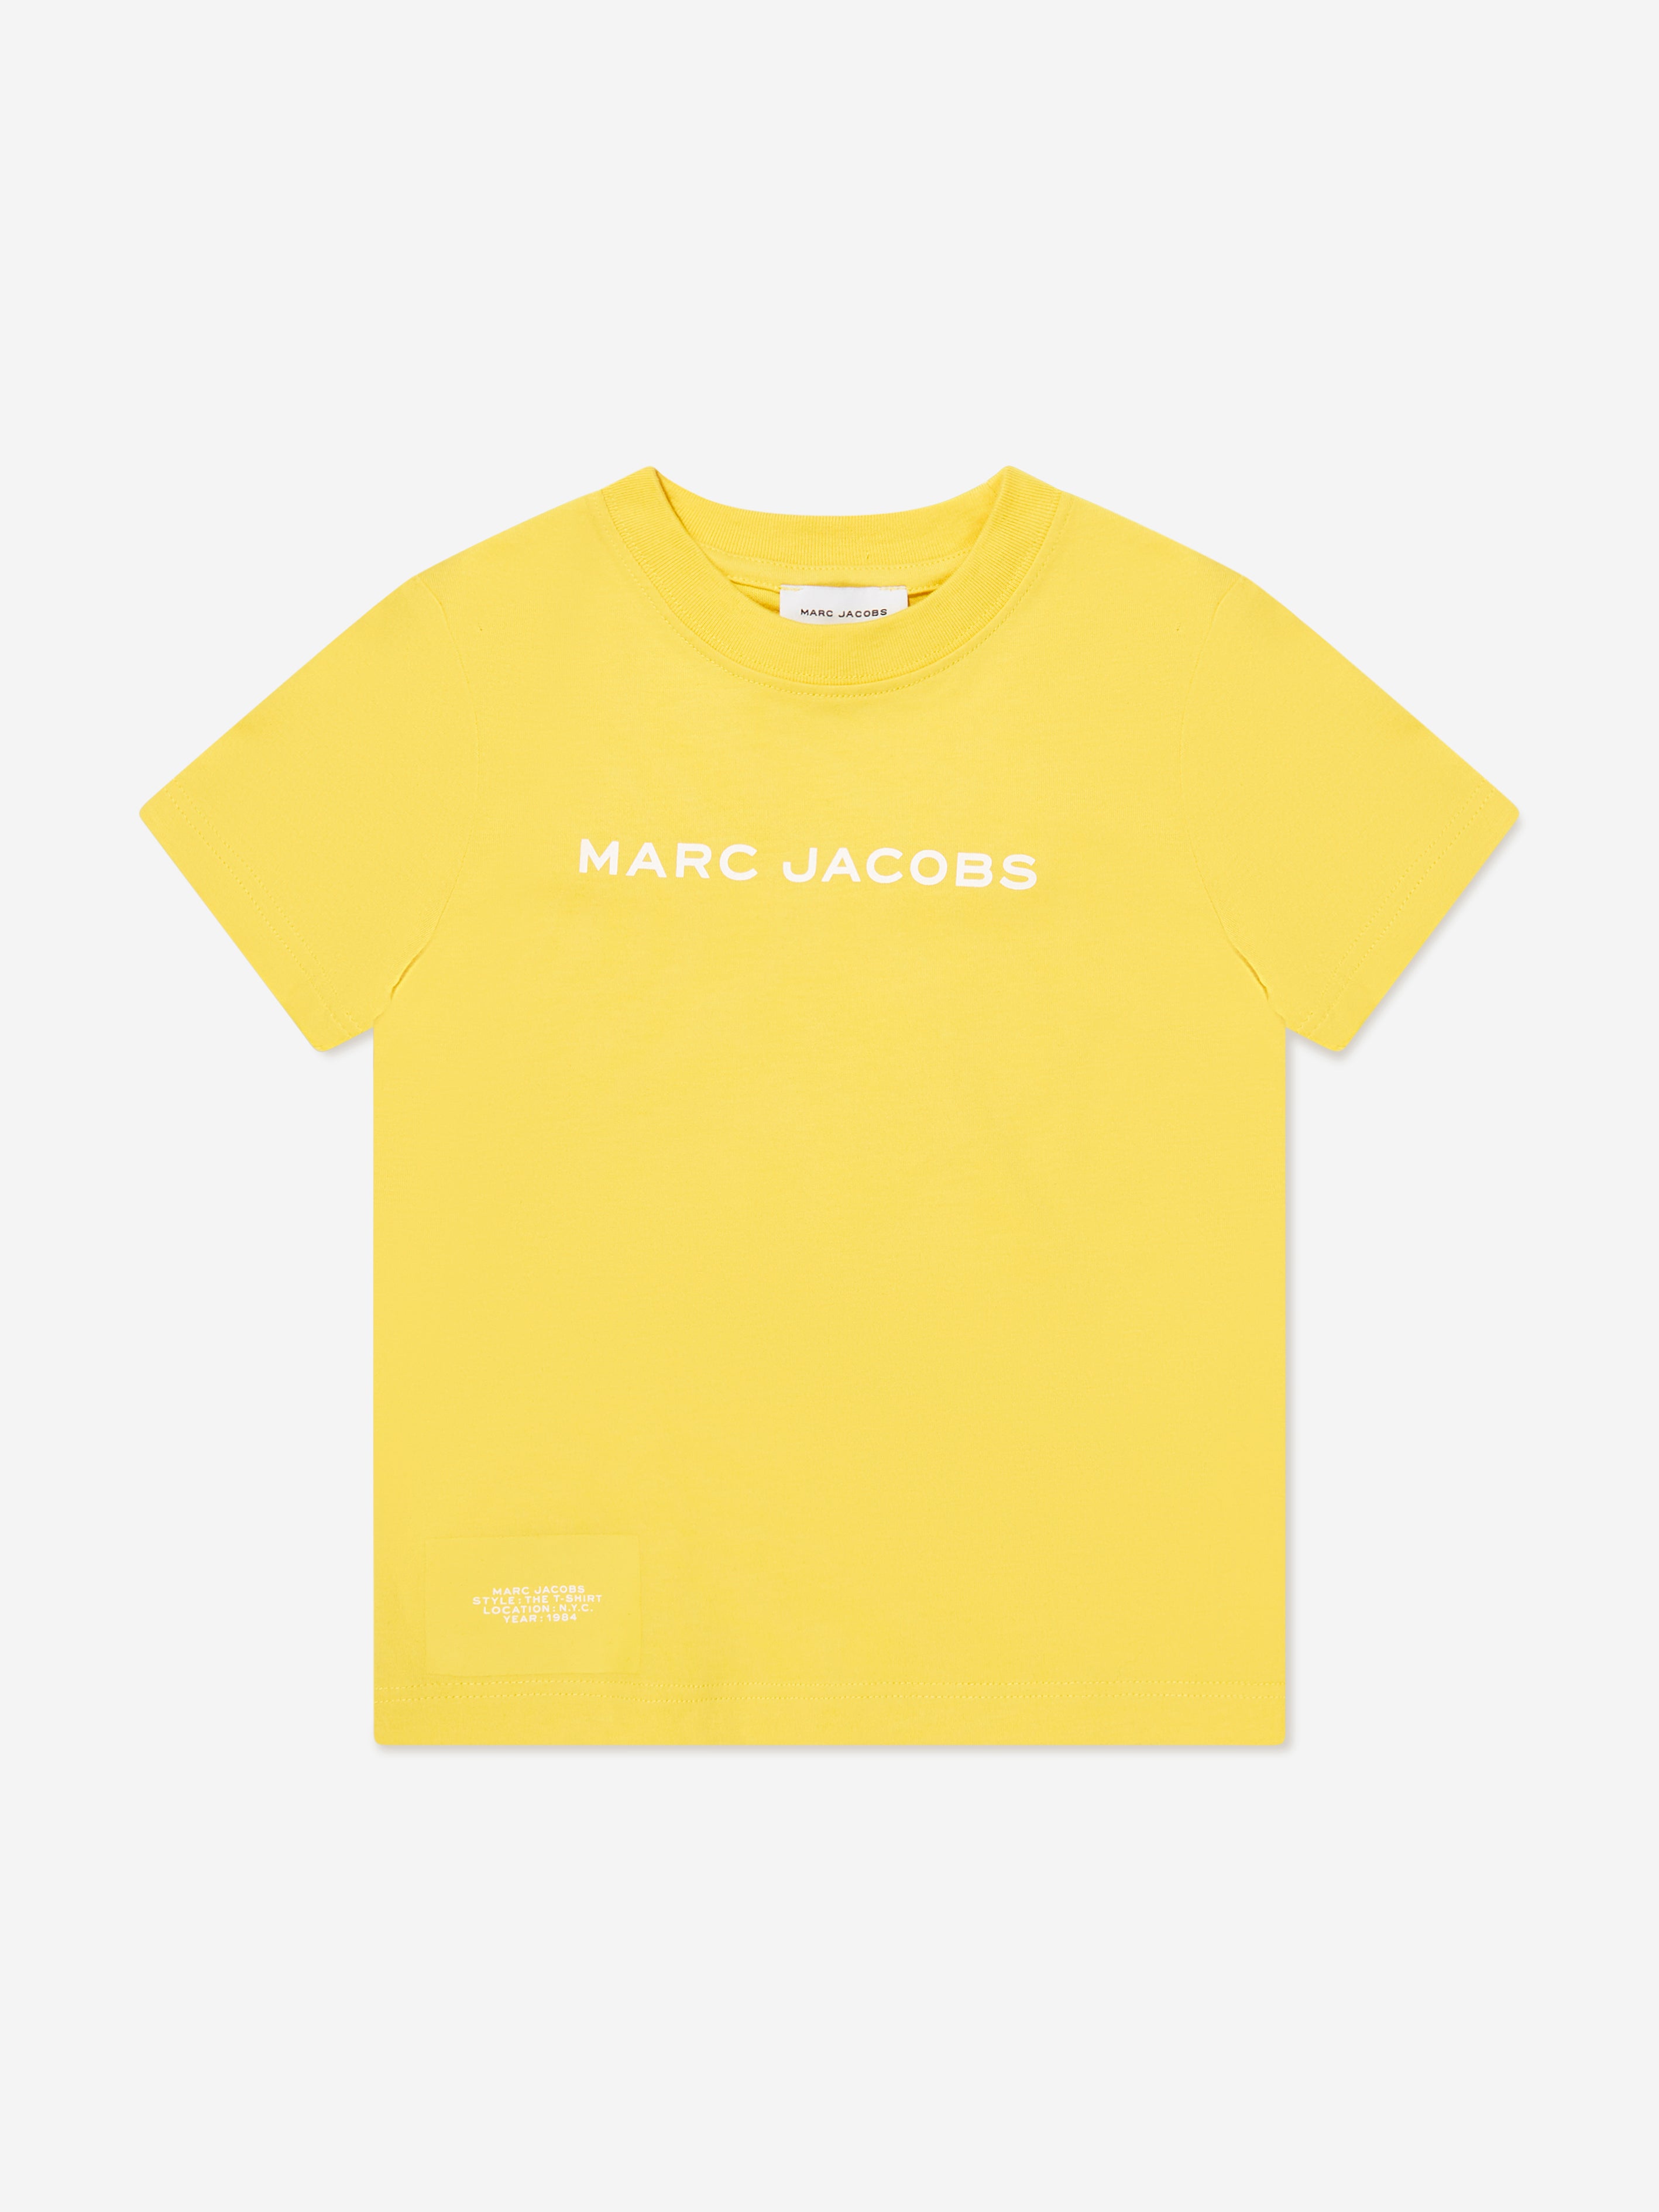 MARC JACOBS Kids Logo T-Shirt in Yellow | Childsplay Clothing